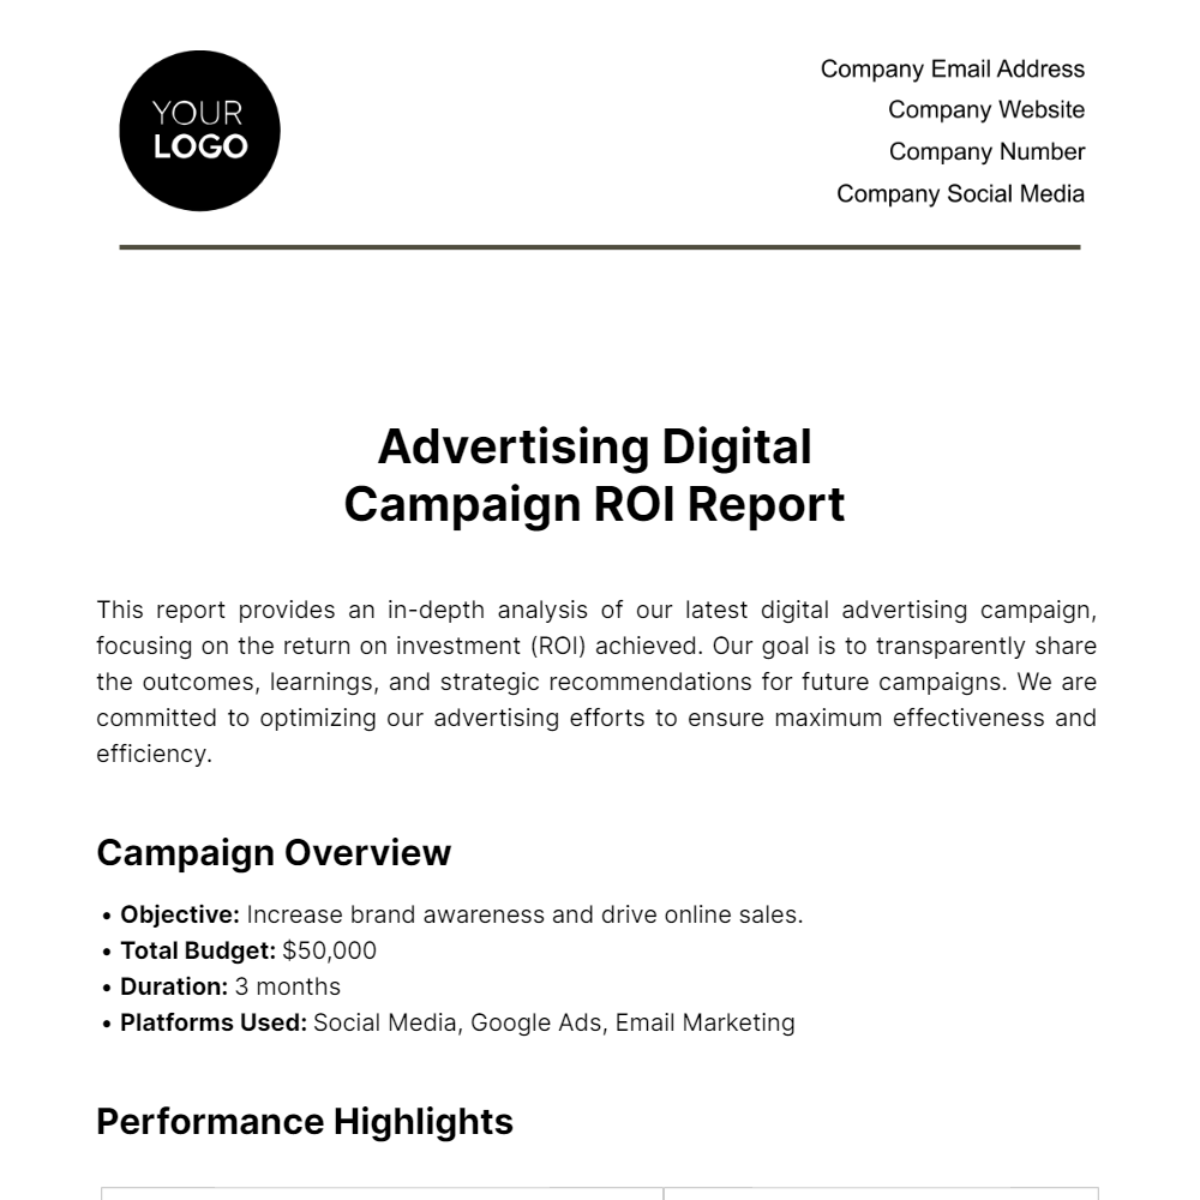 Advertising Digital Campaign ROI Report Template